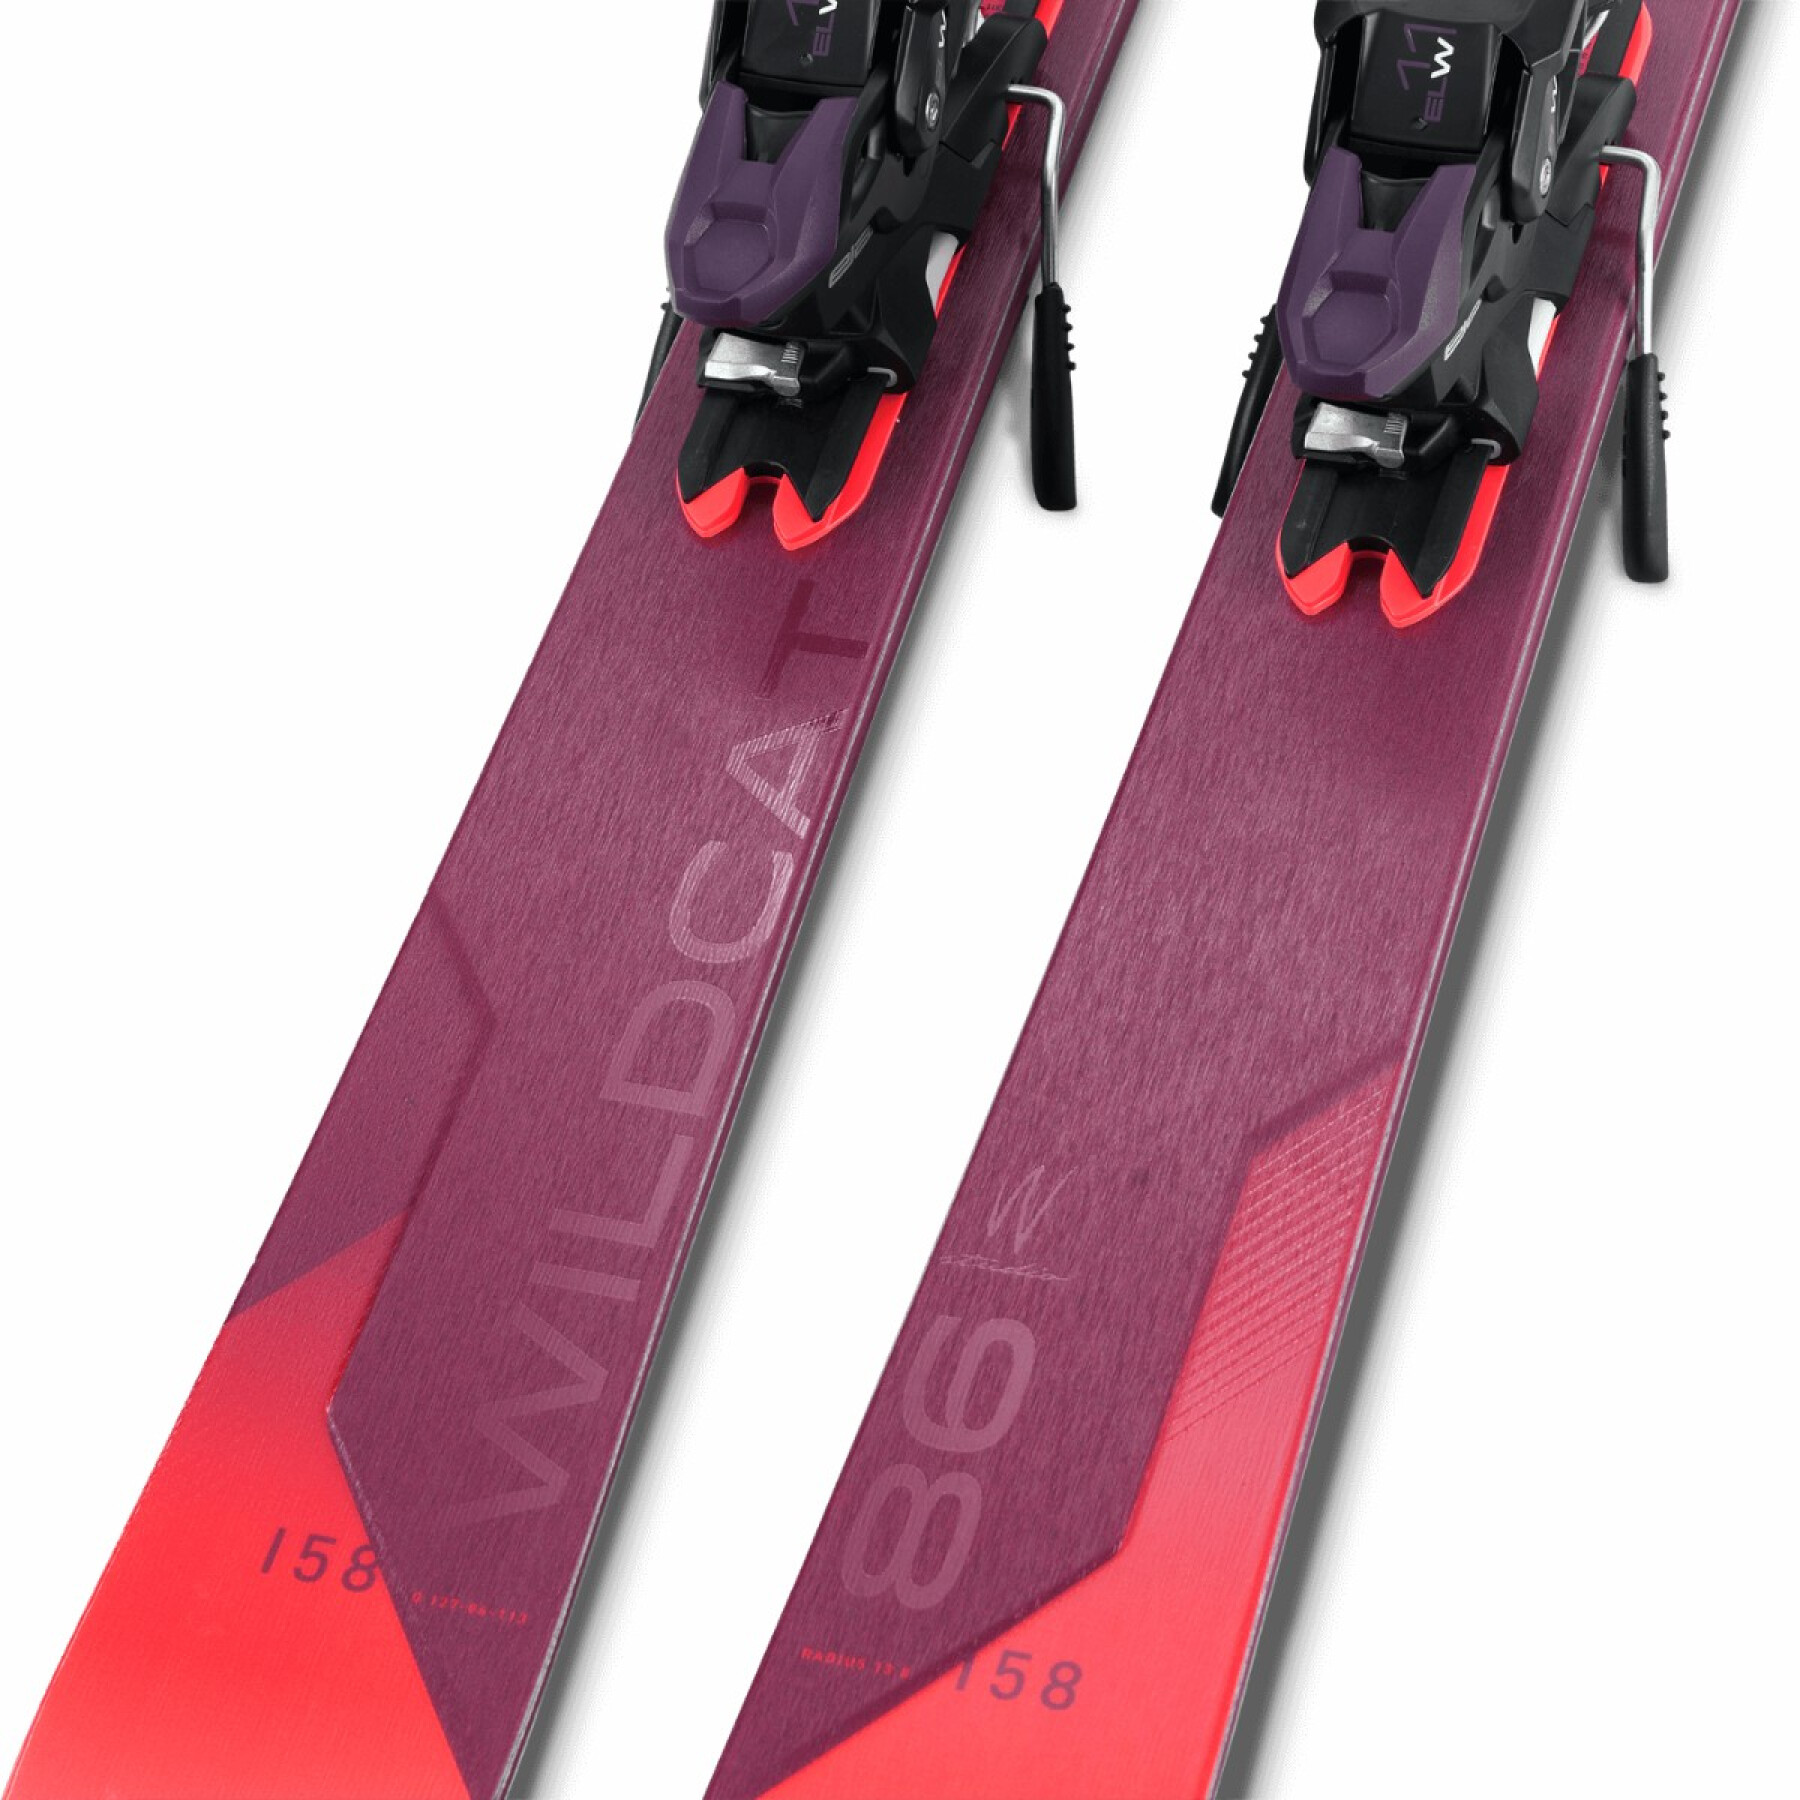 Wildcat 86 cx ps elw 11.0 ski pack with bindings Elan